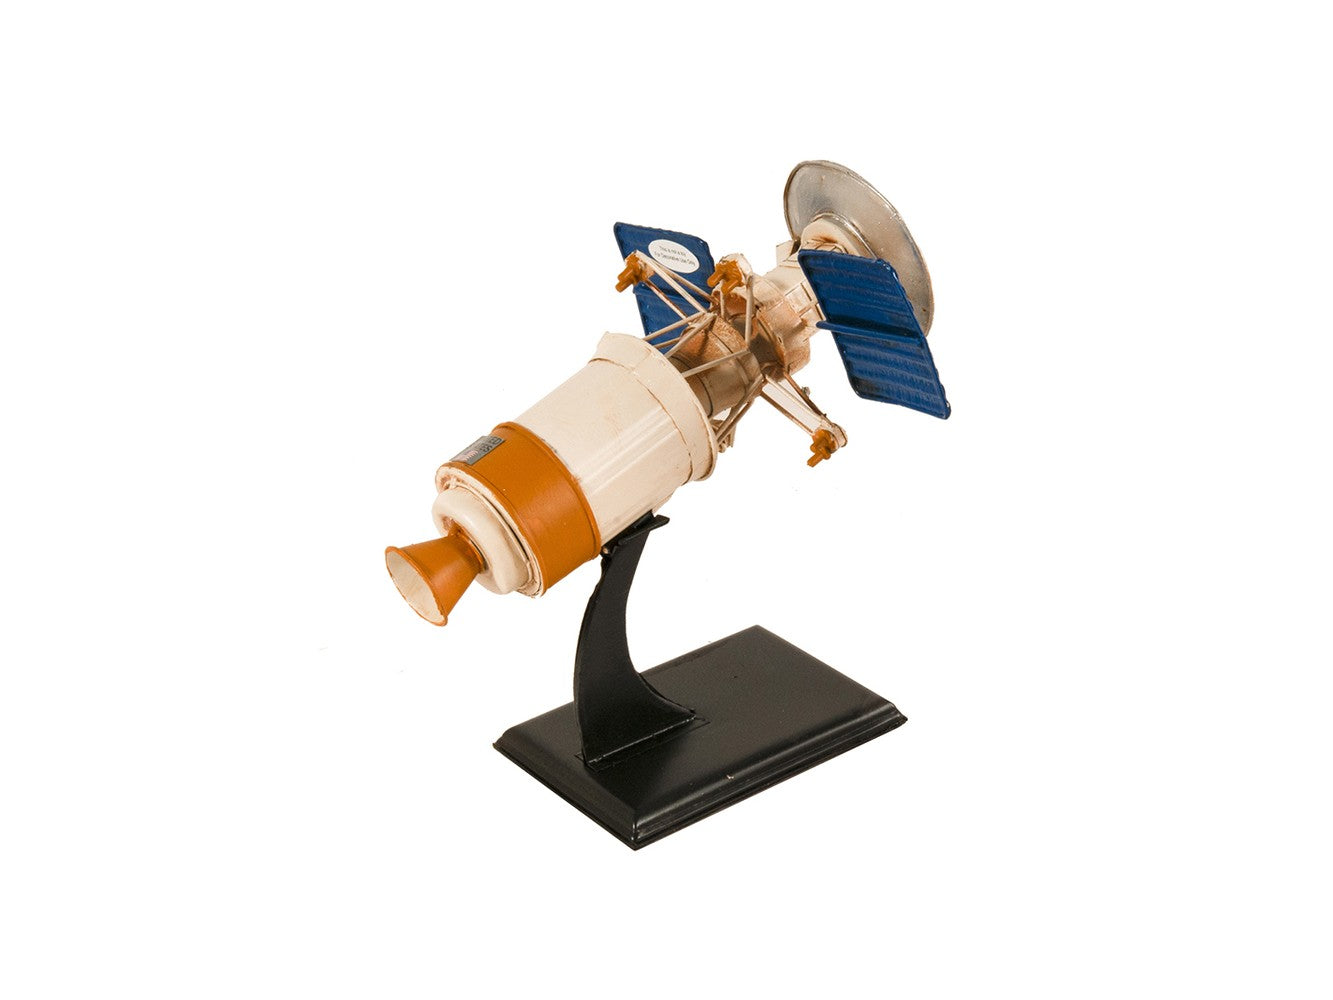 c1989 Magellan Spacecraft Sculpture